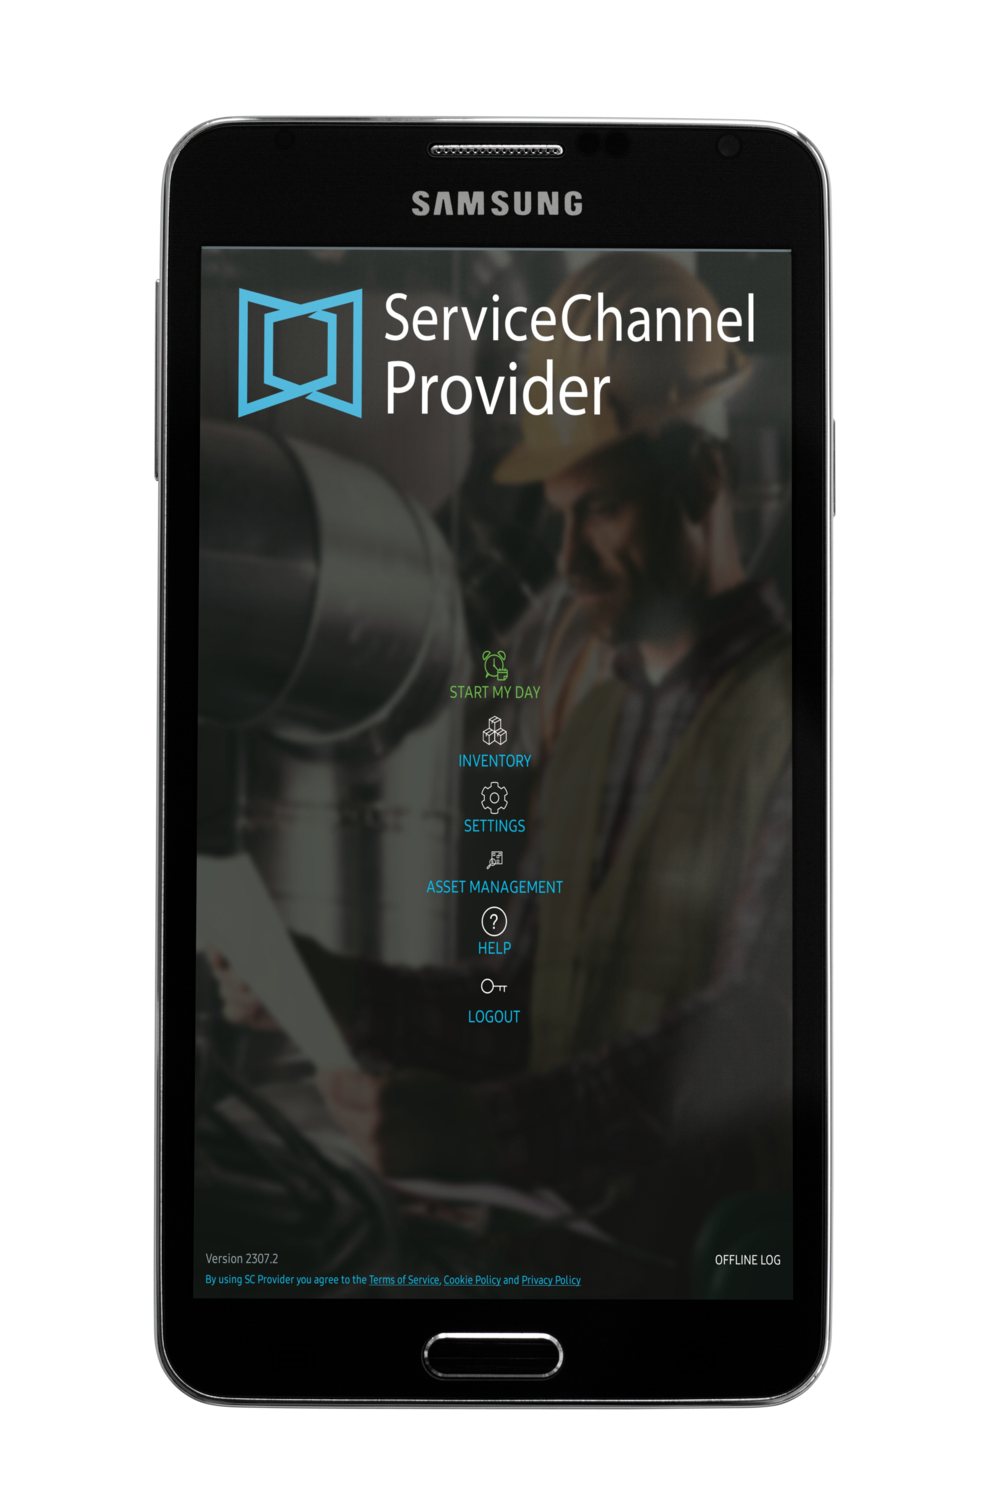 SC Provider Mobile homepage